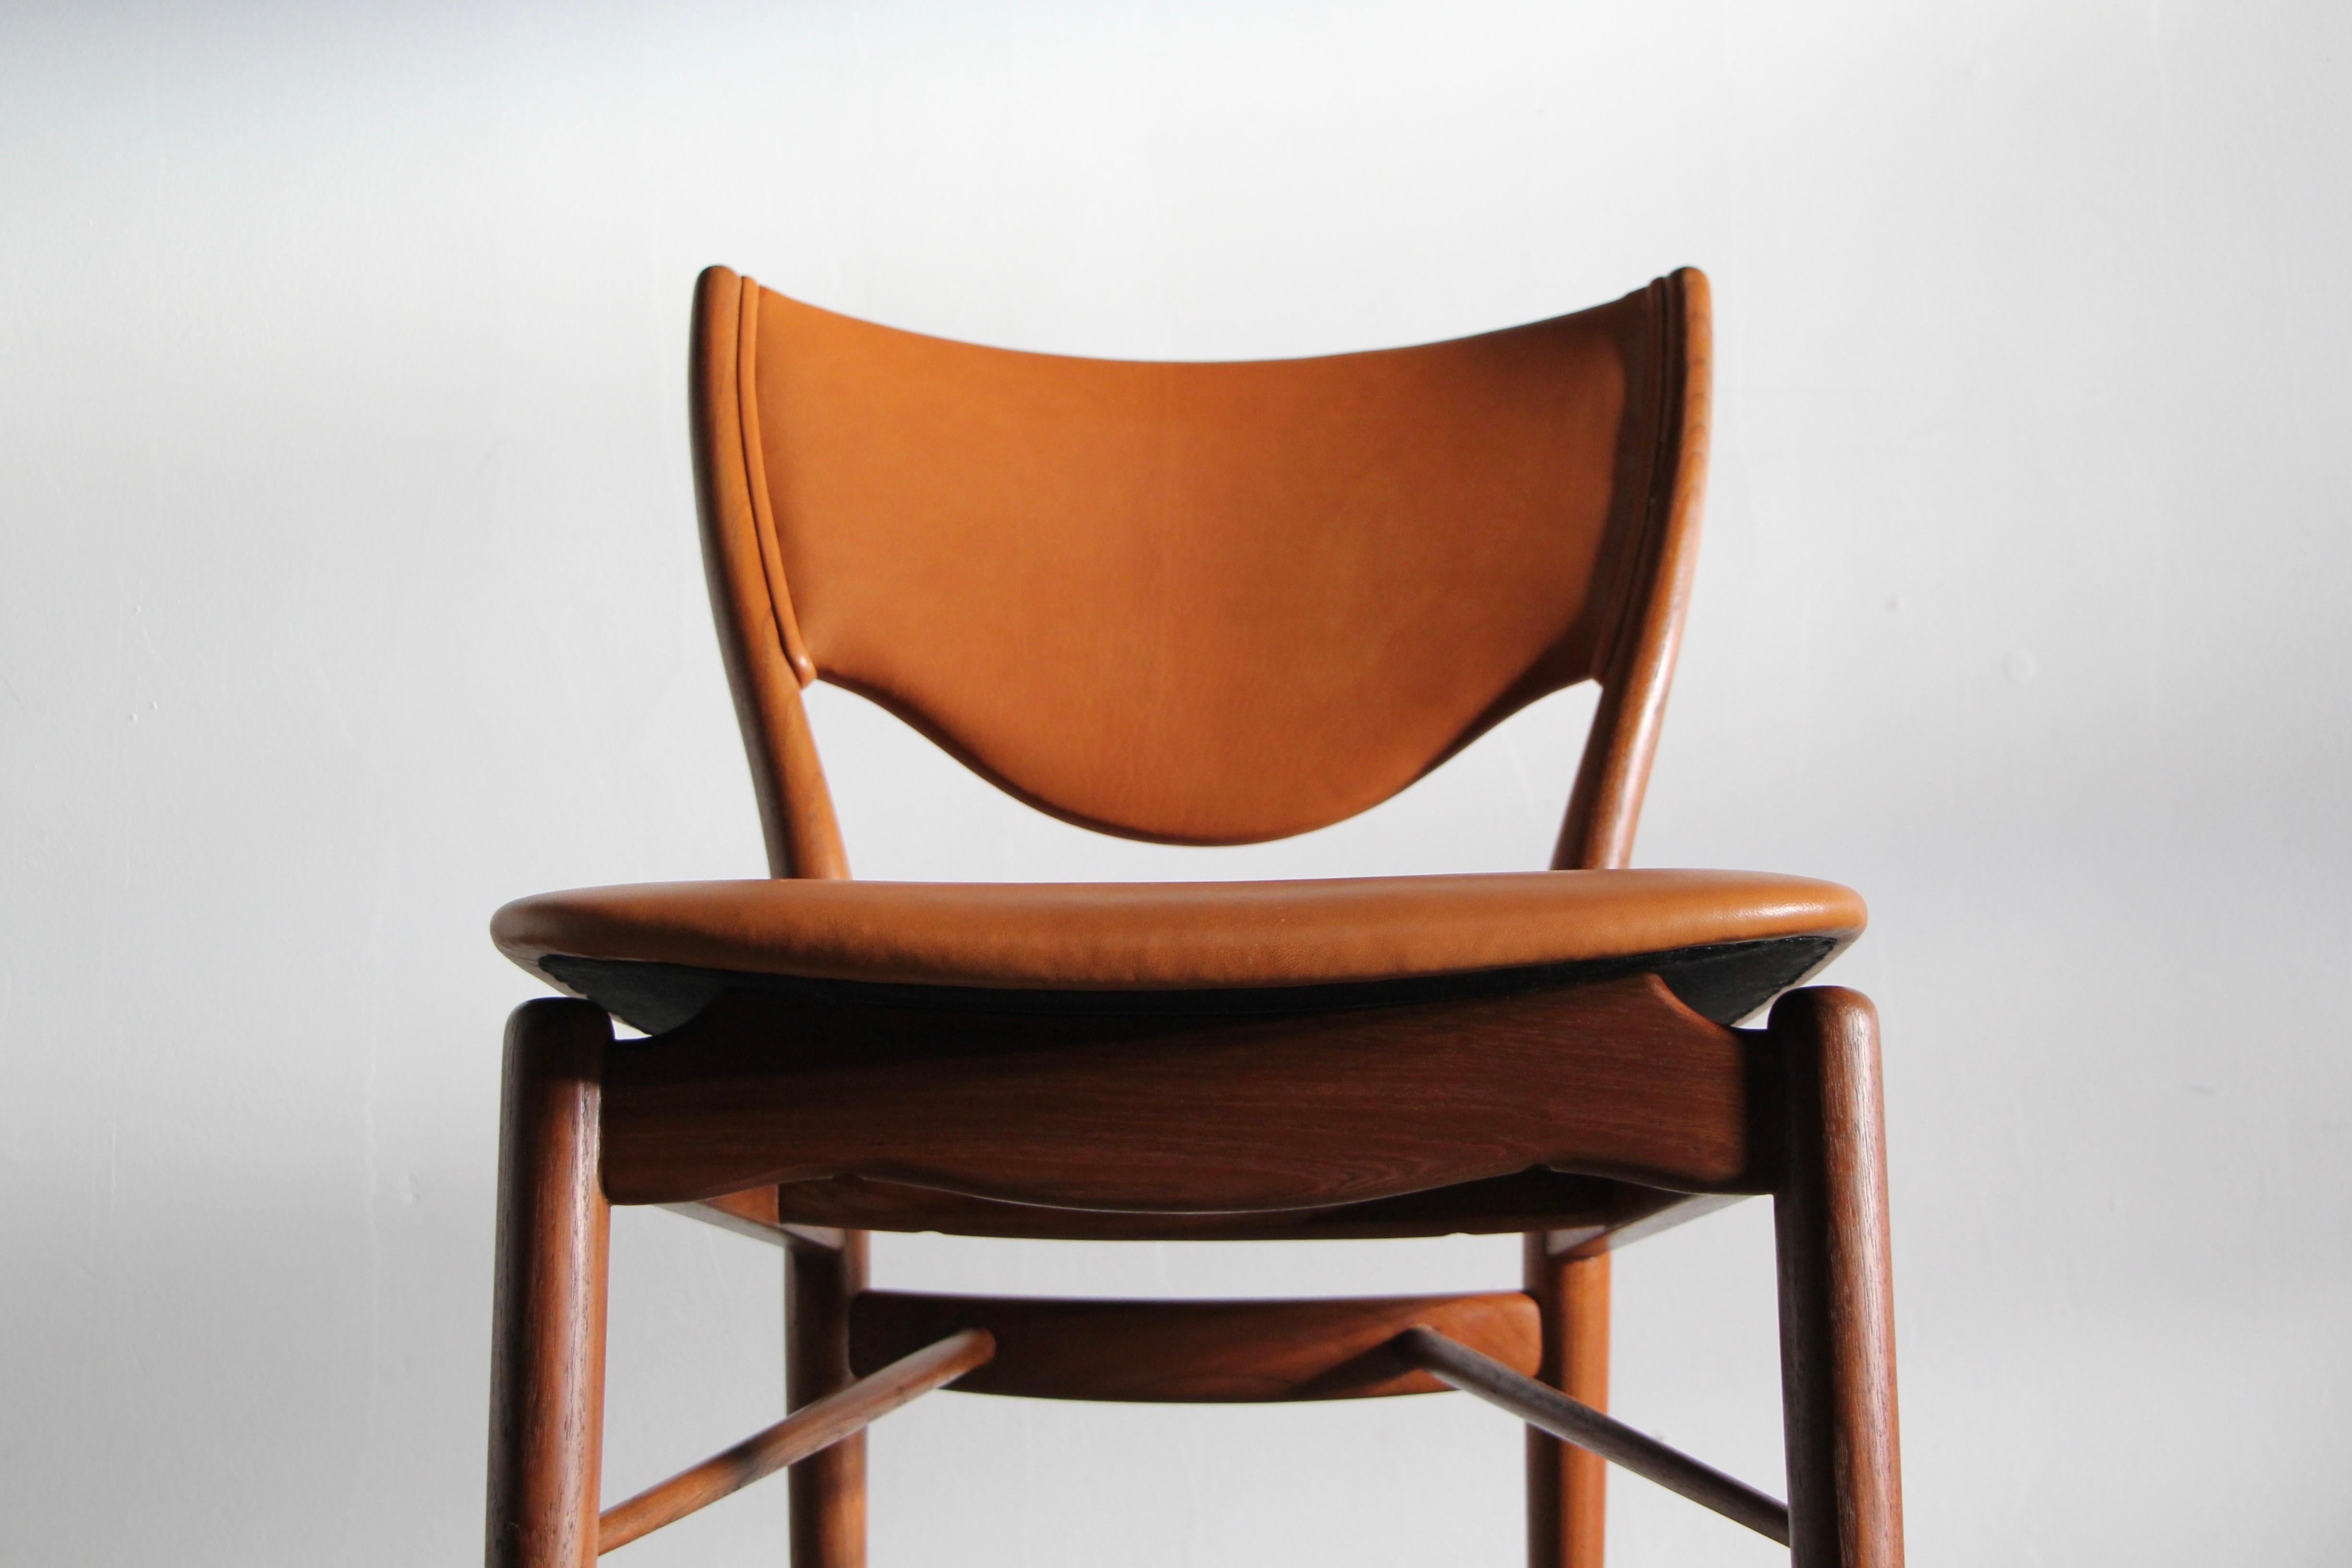 Finn Juhl “BO 63” Sculpted Teak Dining Chairs in Cognac Goatskin Leather, 1950s For Sale 4